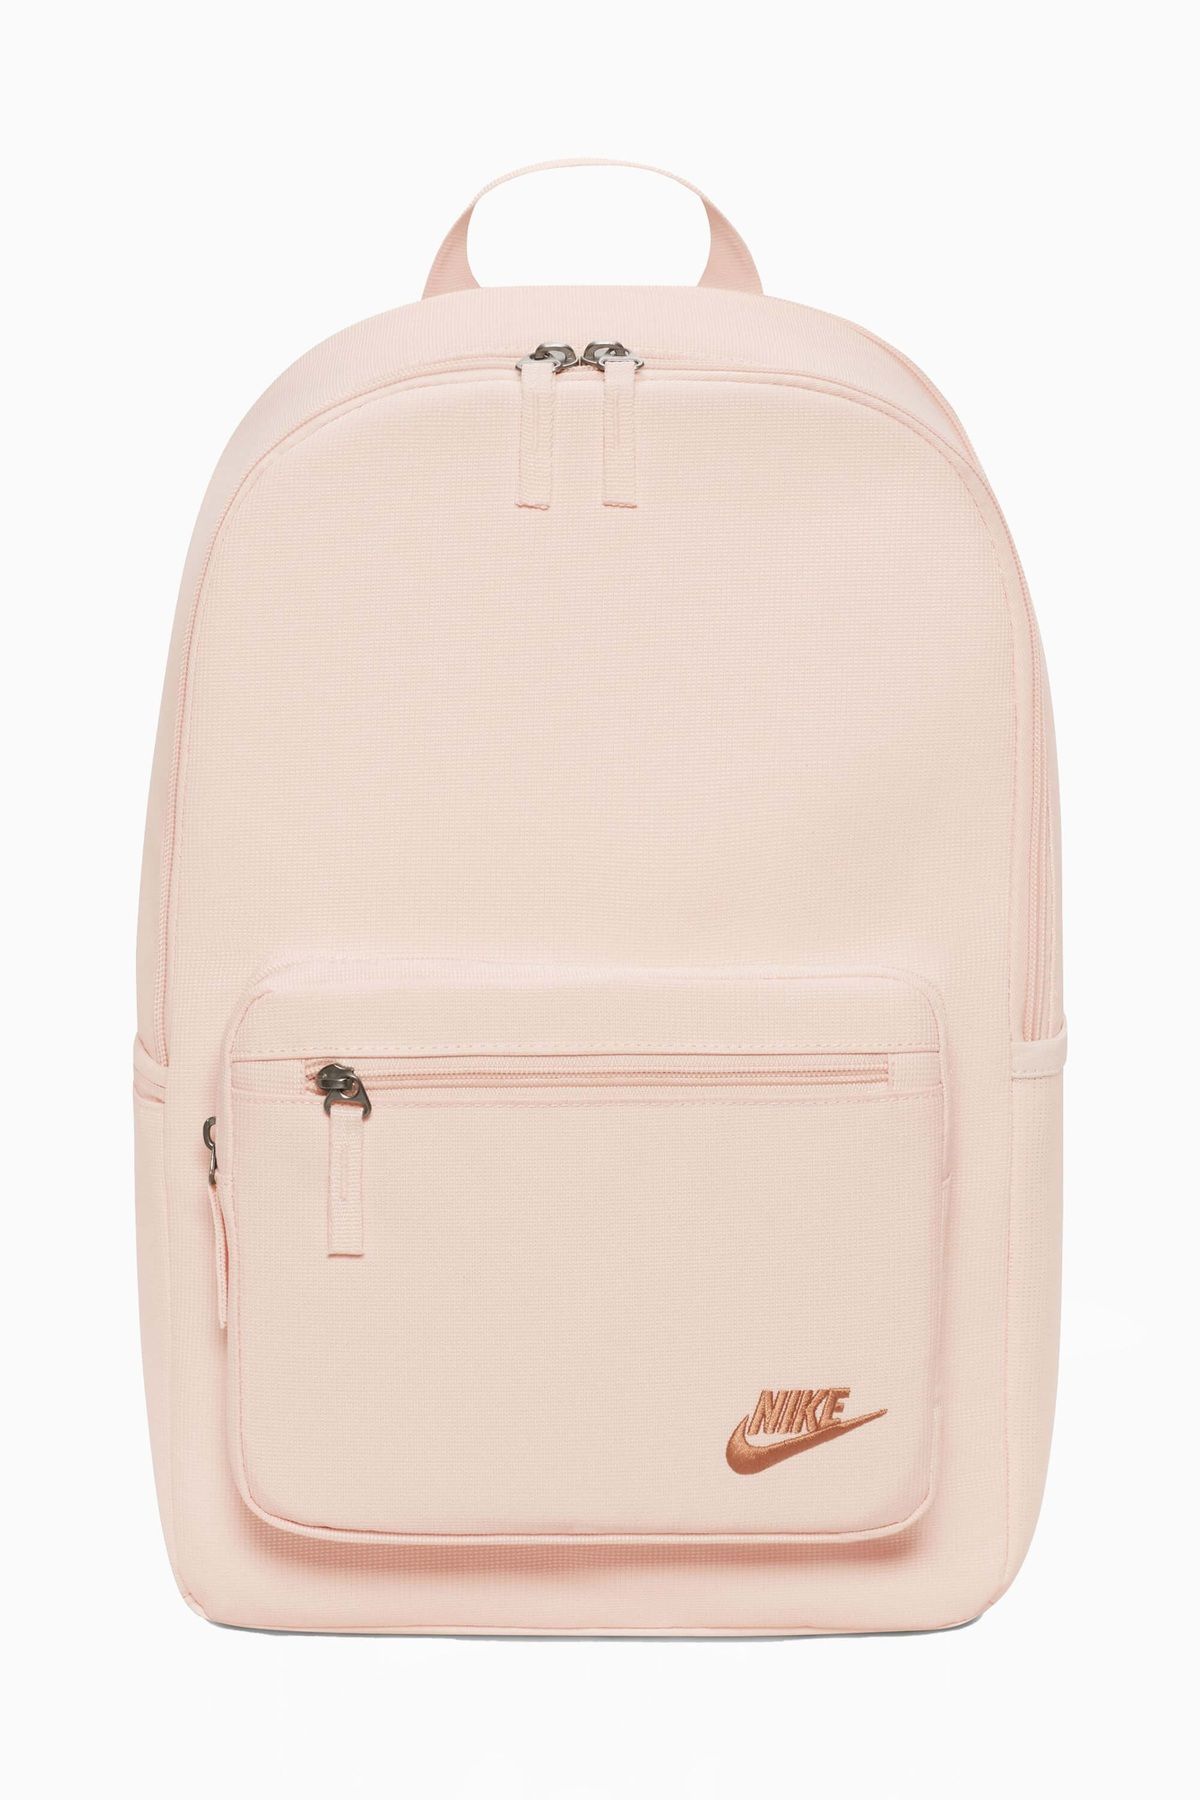 Nike Bag Handbag - Buy Nike Bag Handbag online in India